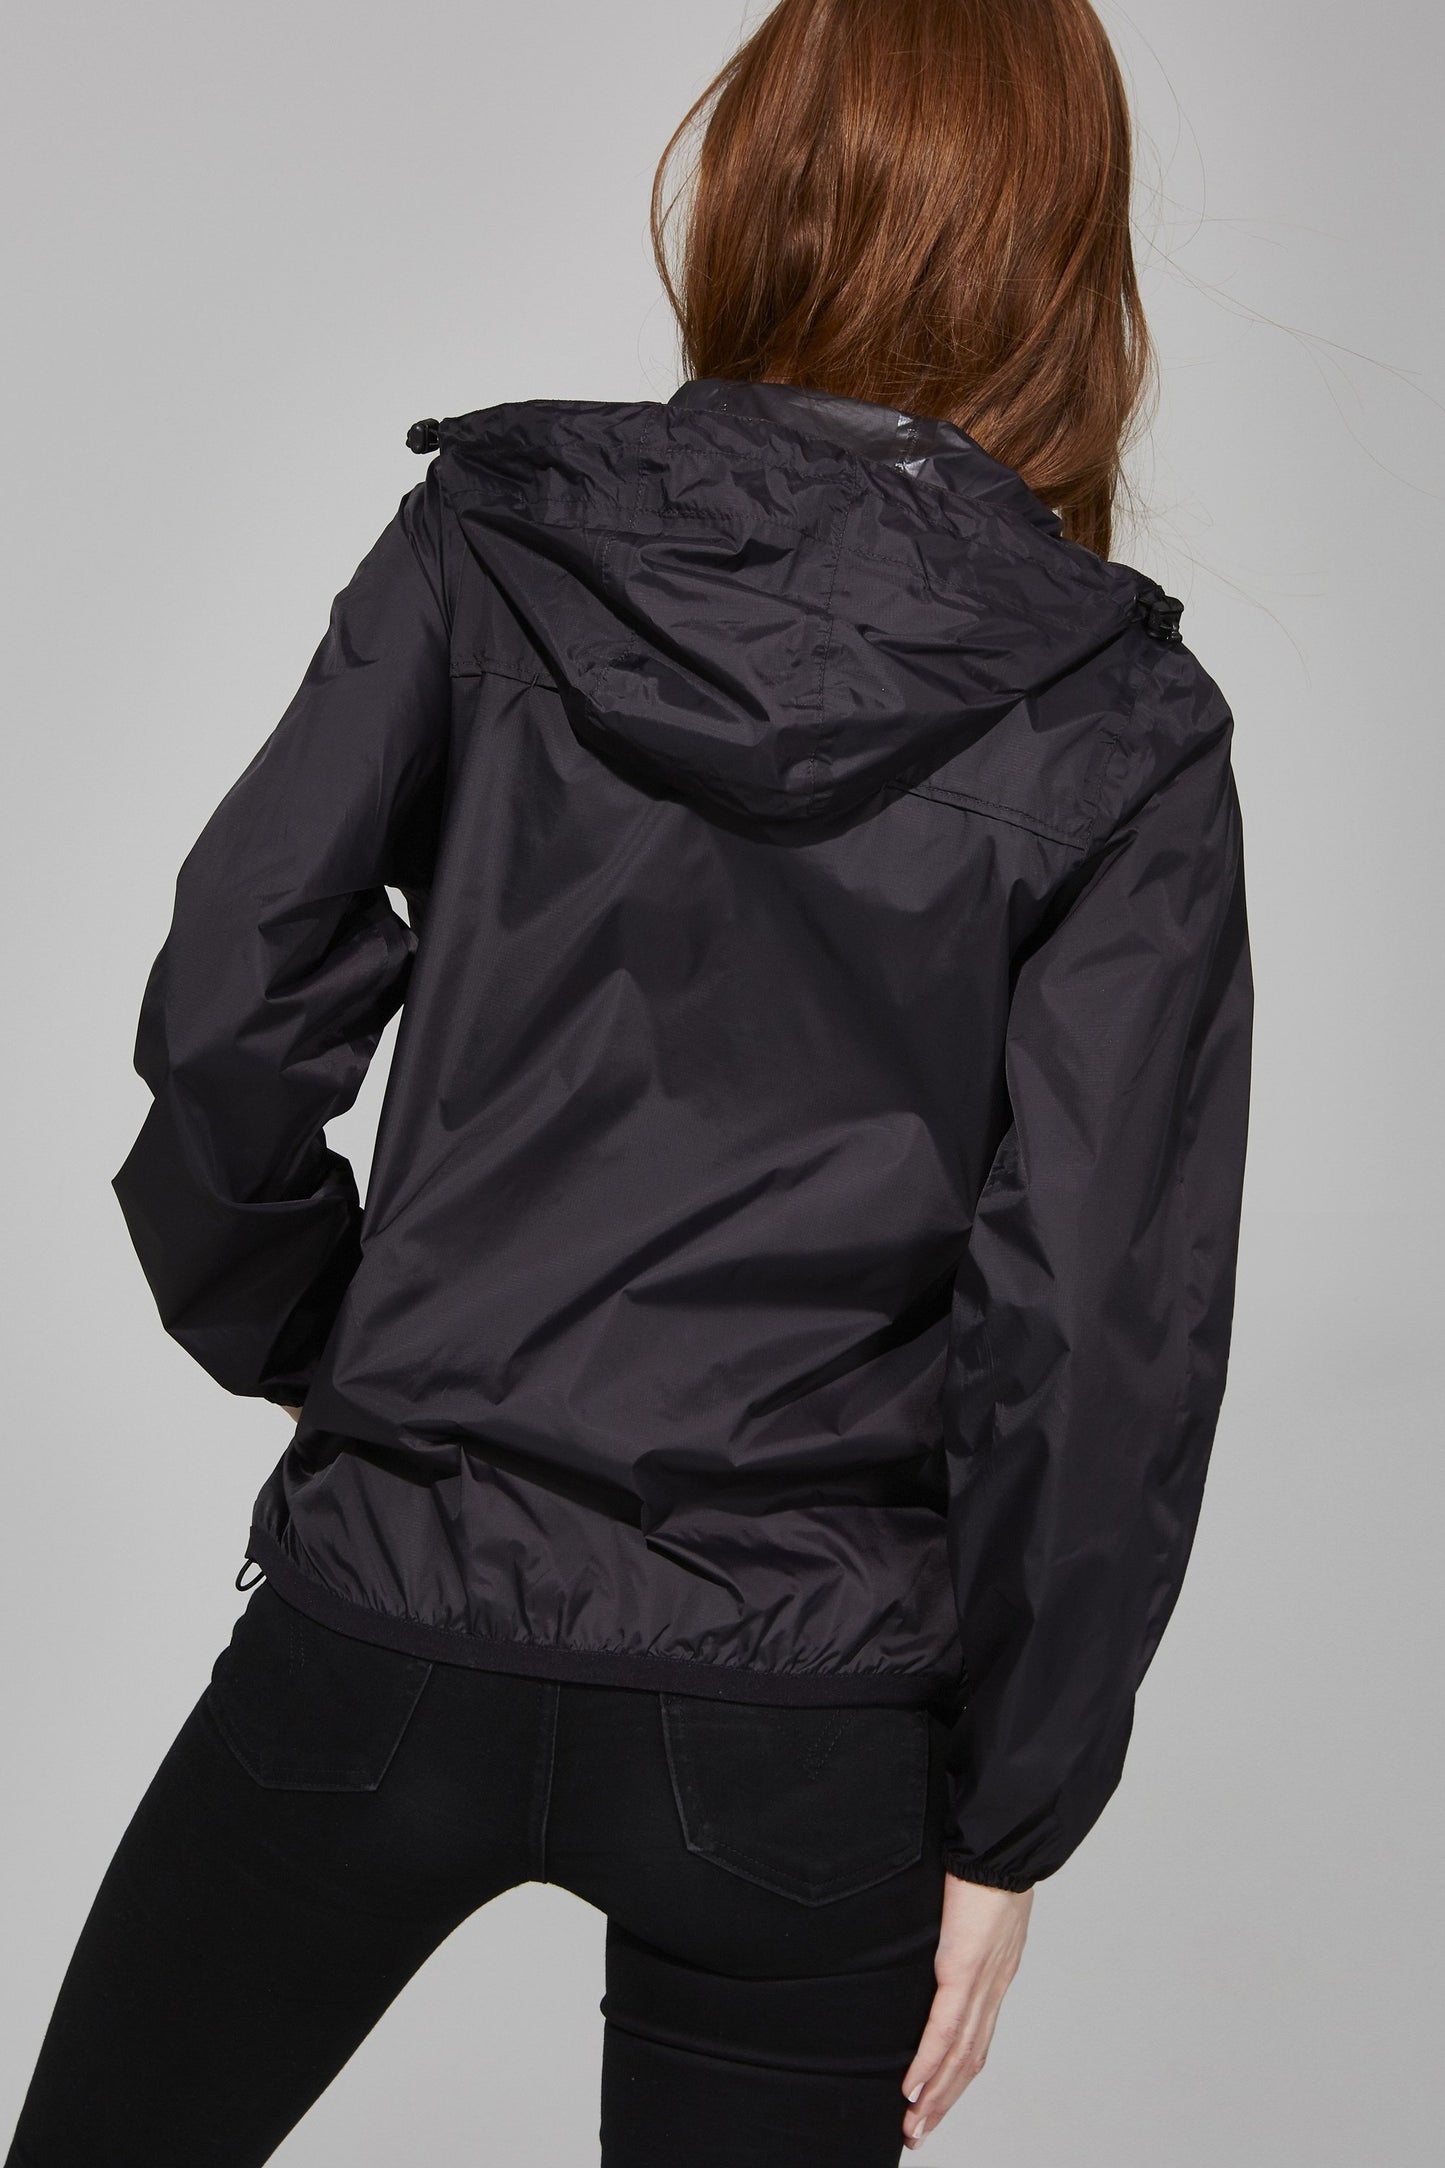 Full Zip Packable Rain Jacket and Windbreaker in Black